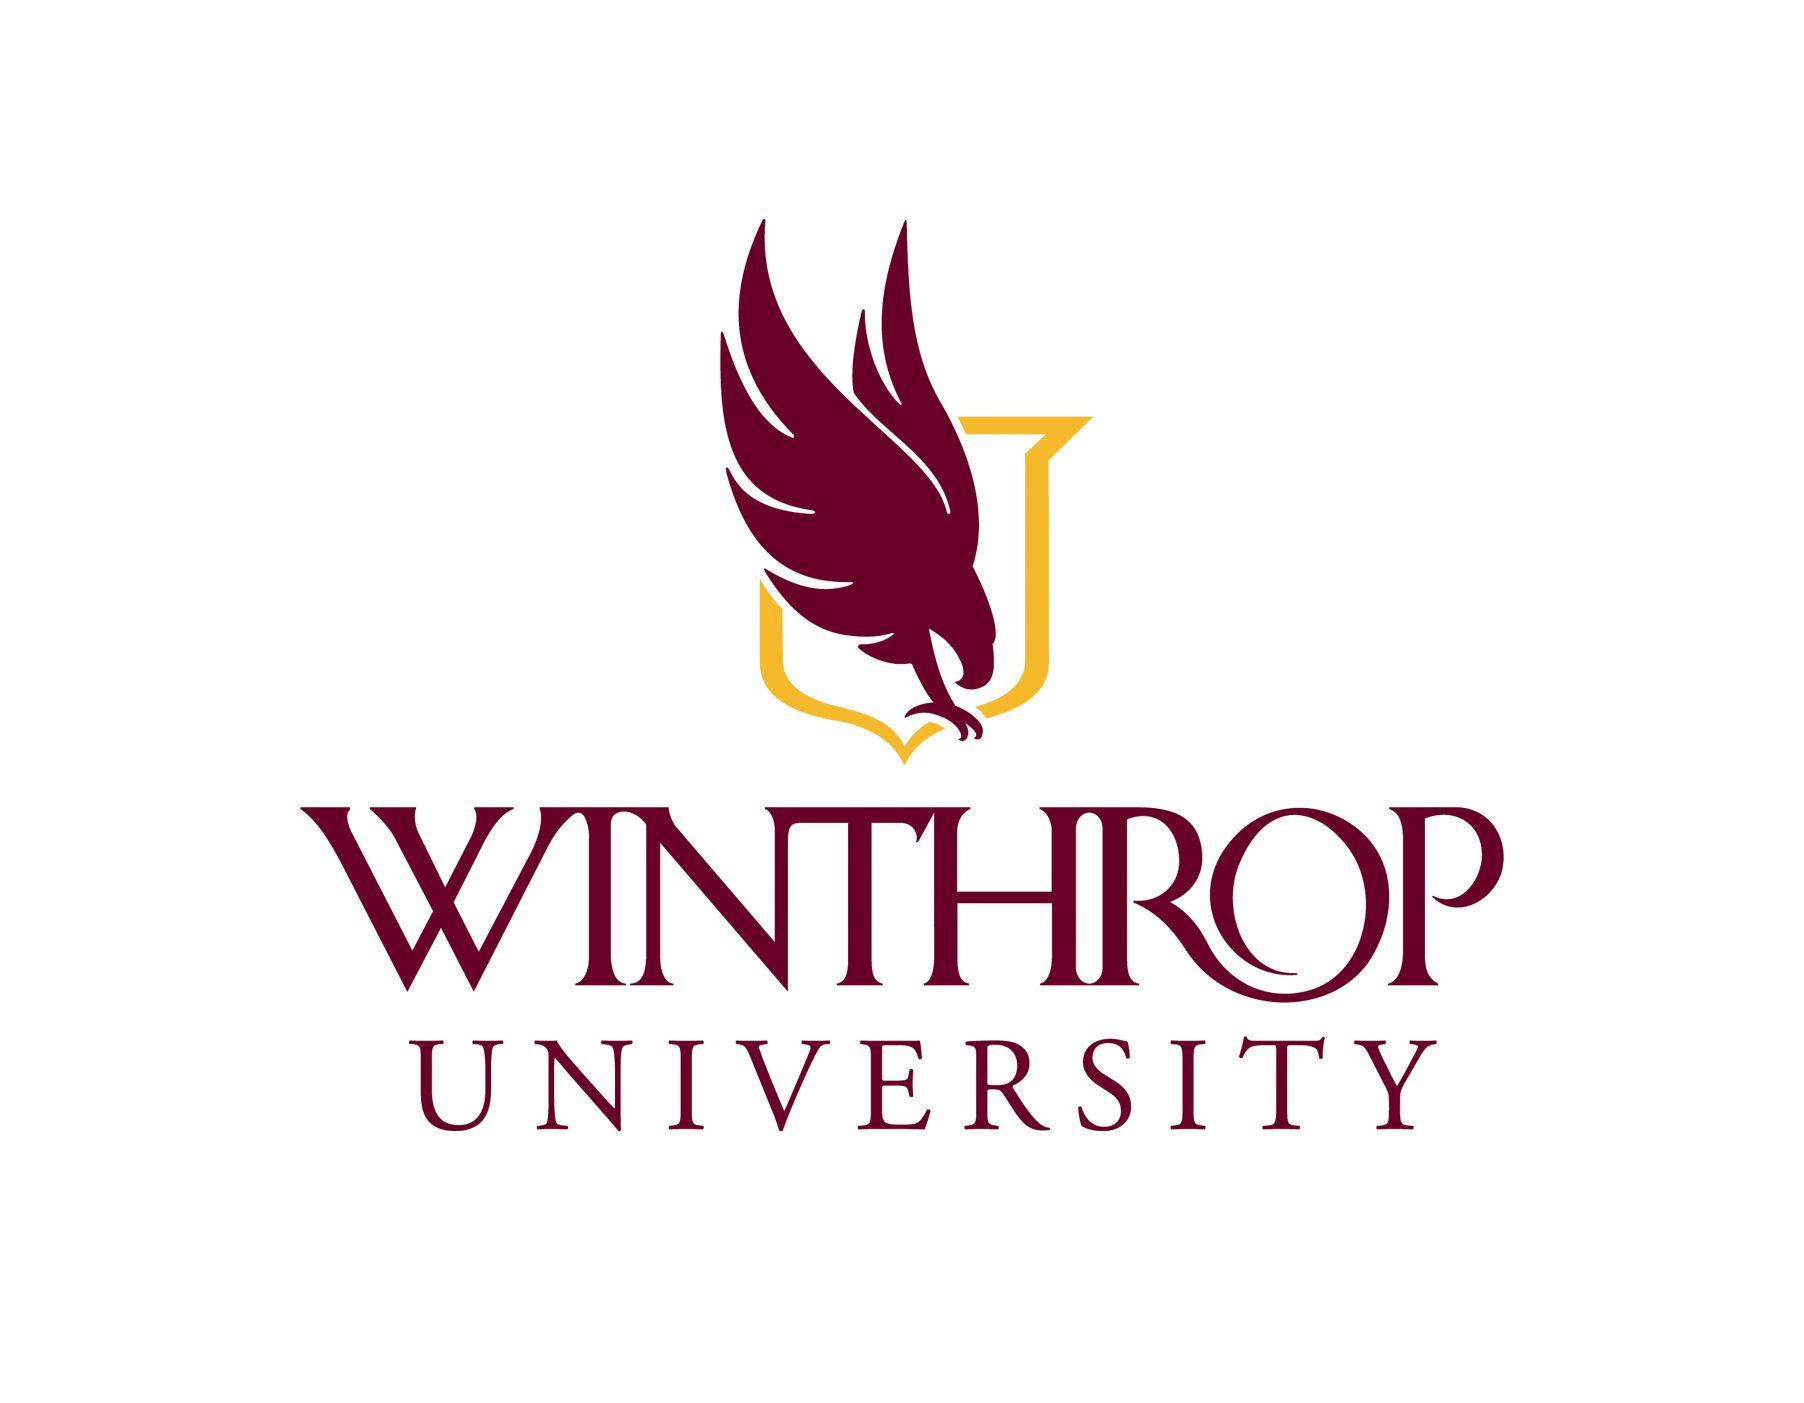 Winthrop Logo - Winthrop University | FMB Advertising Agency in Knoxville